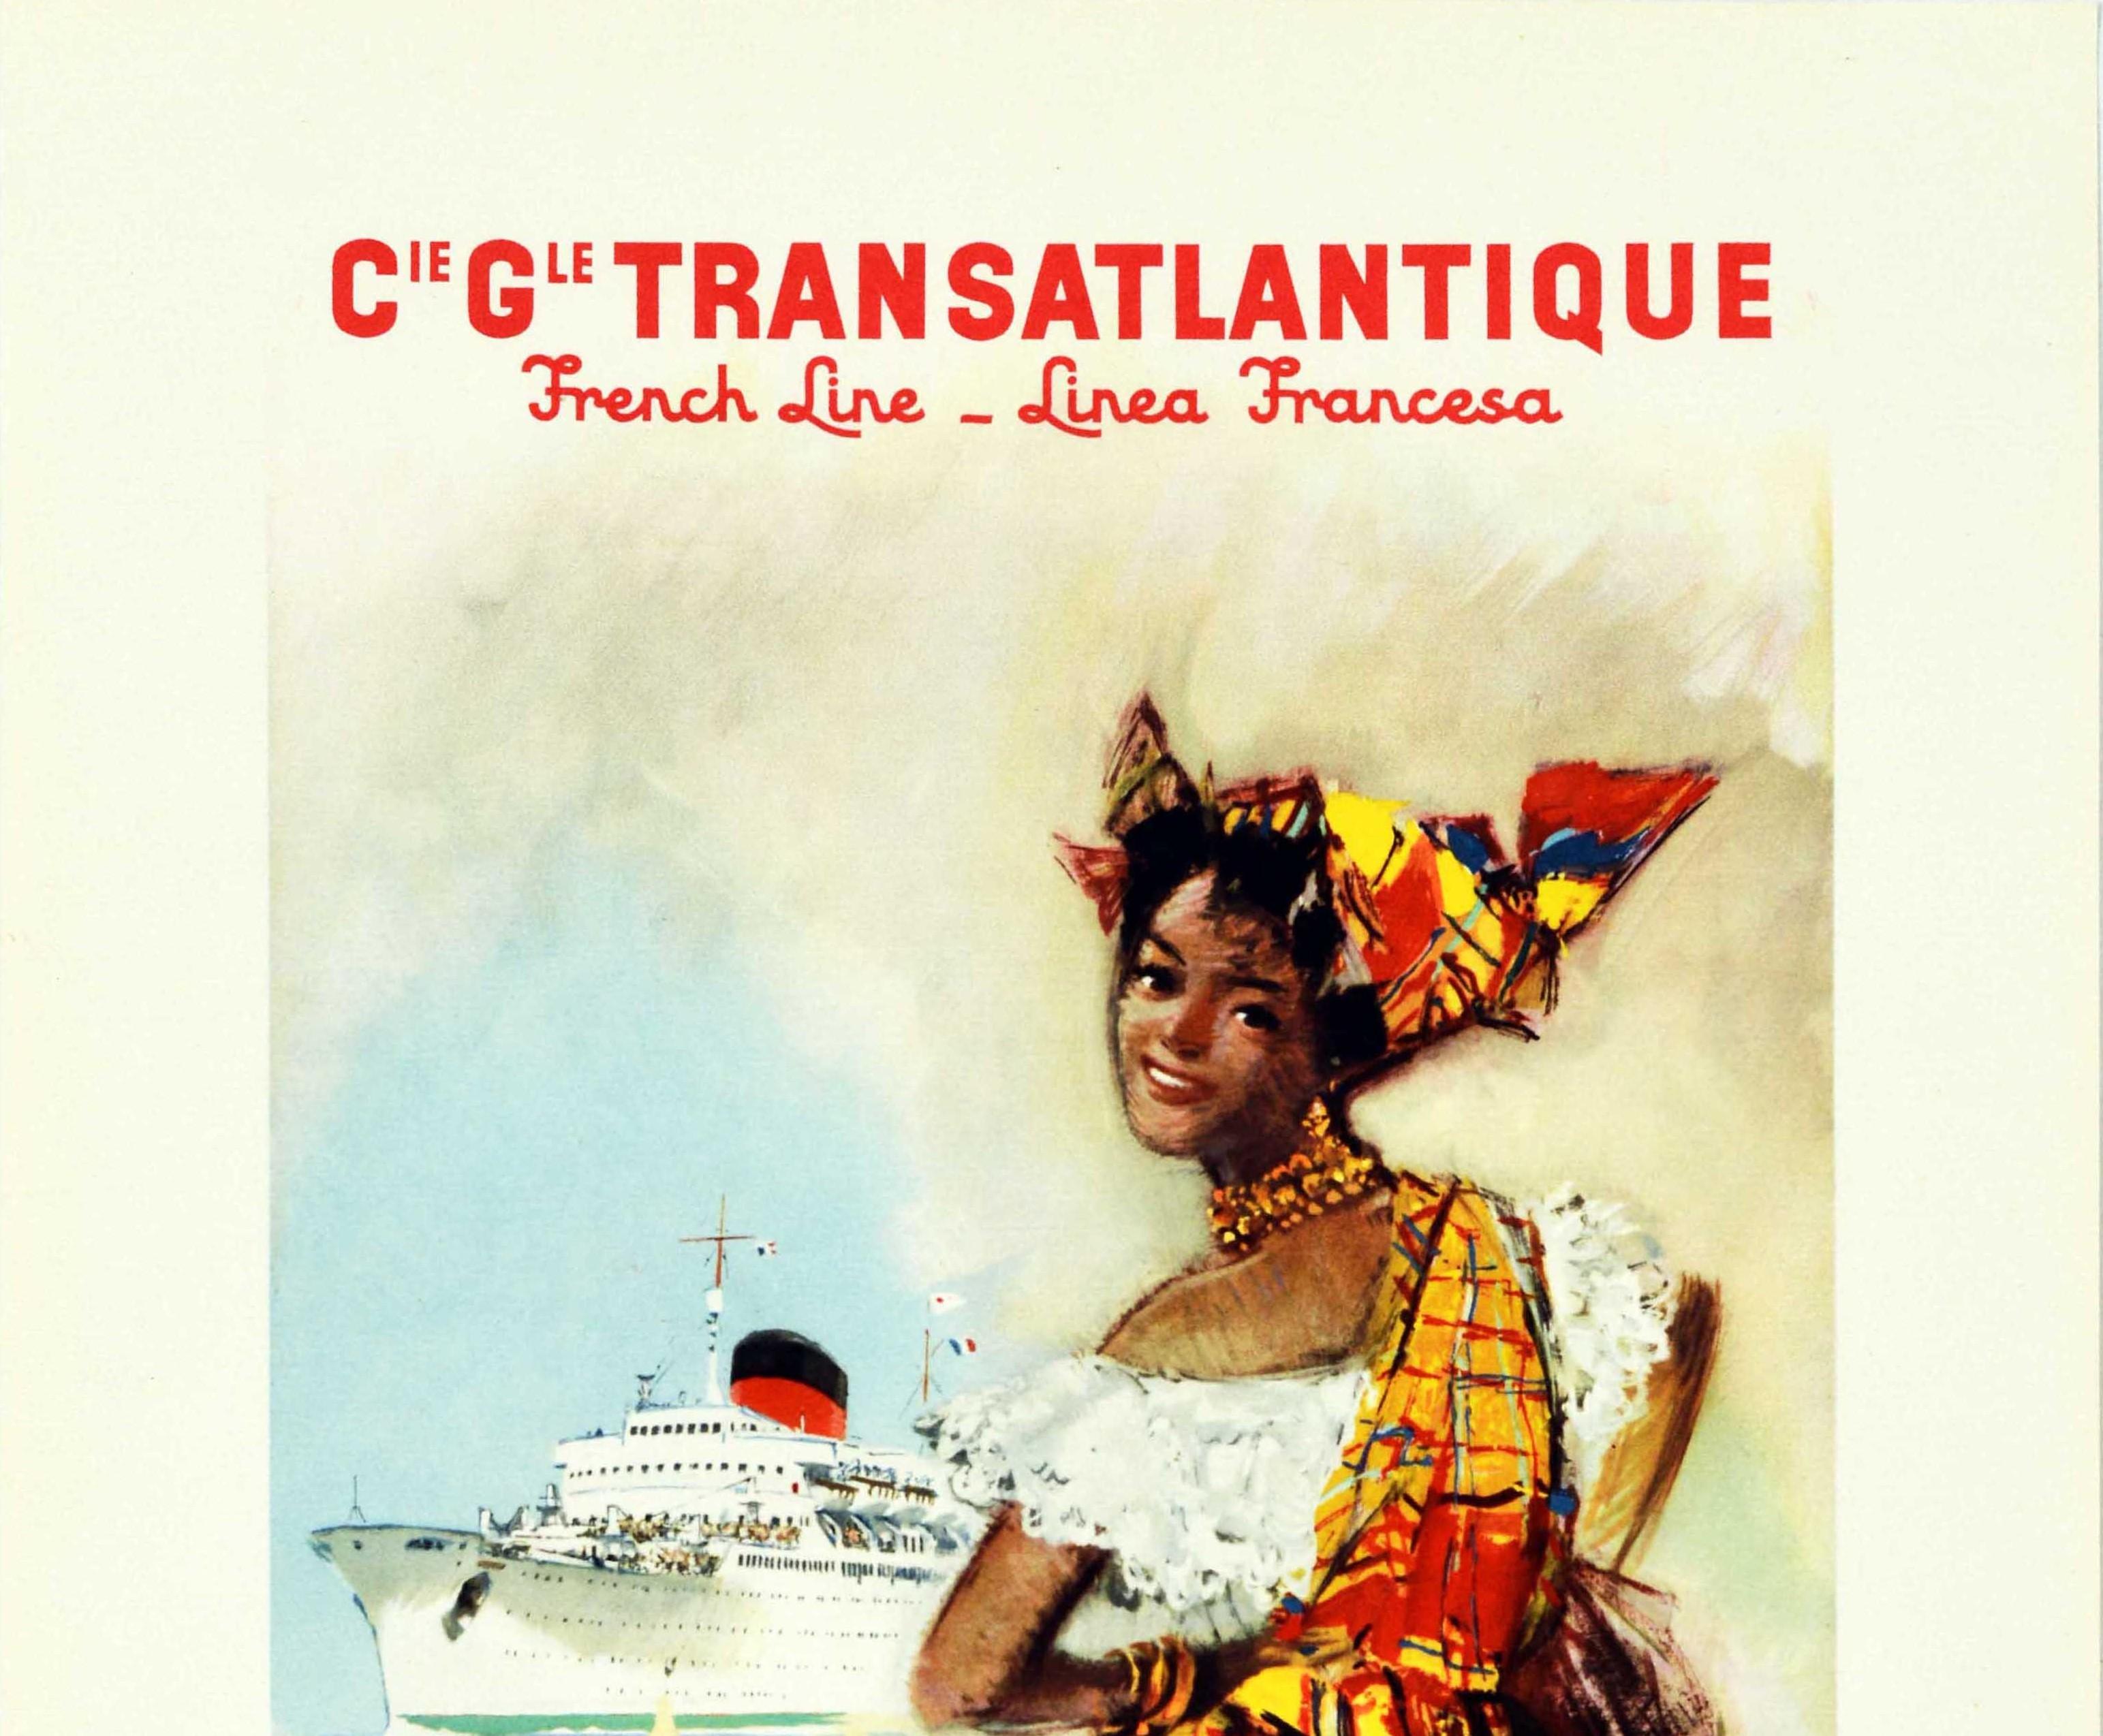 Original Vintage Travel Poster Transatlantique French Line Antilles Venezuela - Print by Albert Brenet